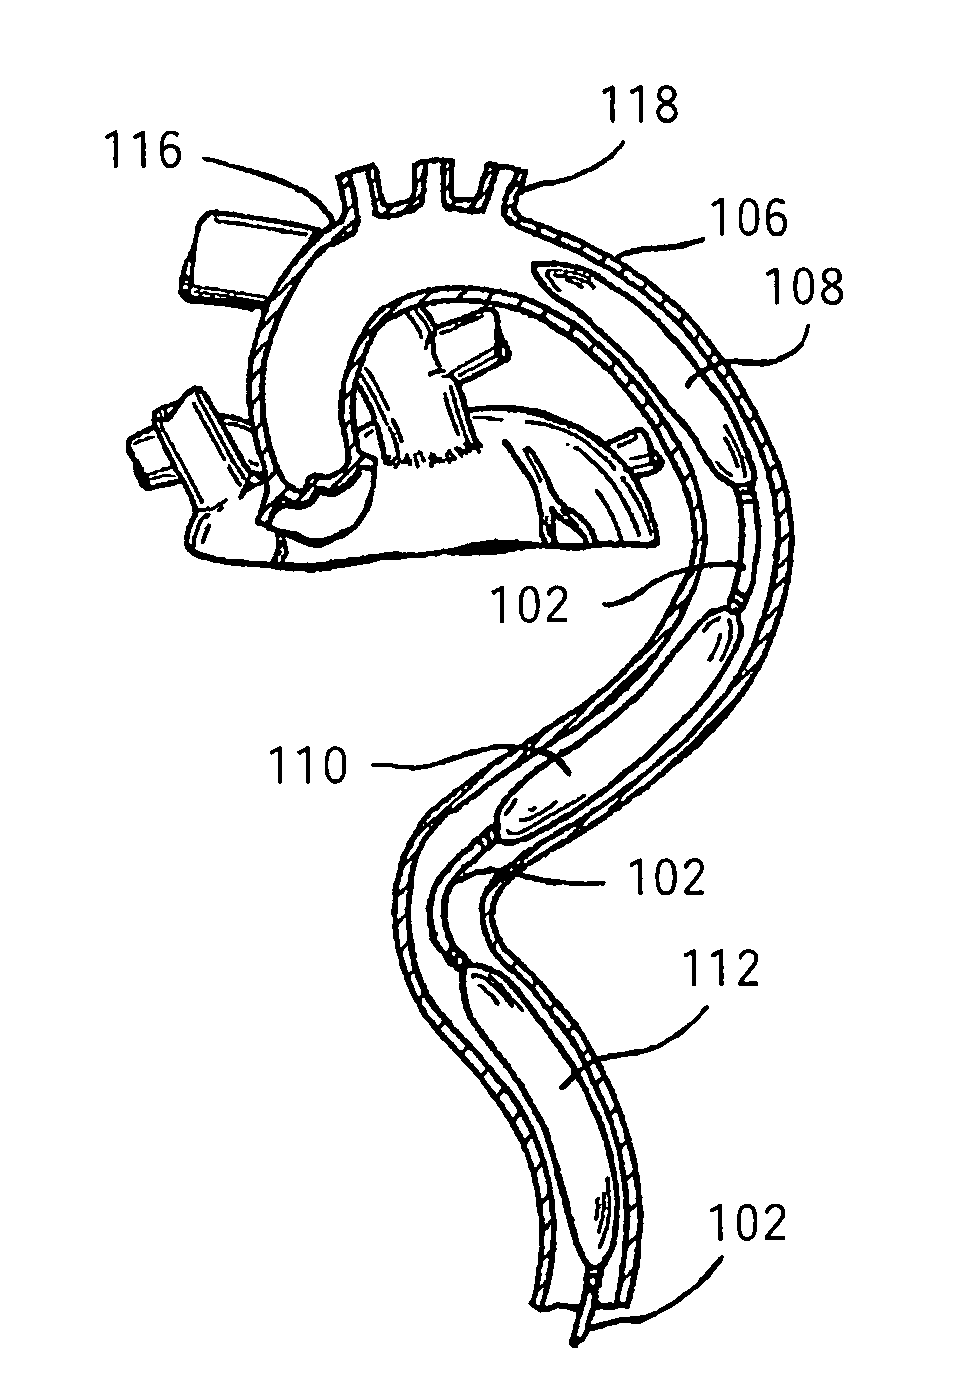 Long term ambulatory intro-aortic balloon pump with percutaneous access device